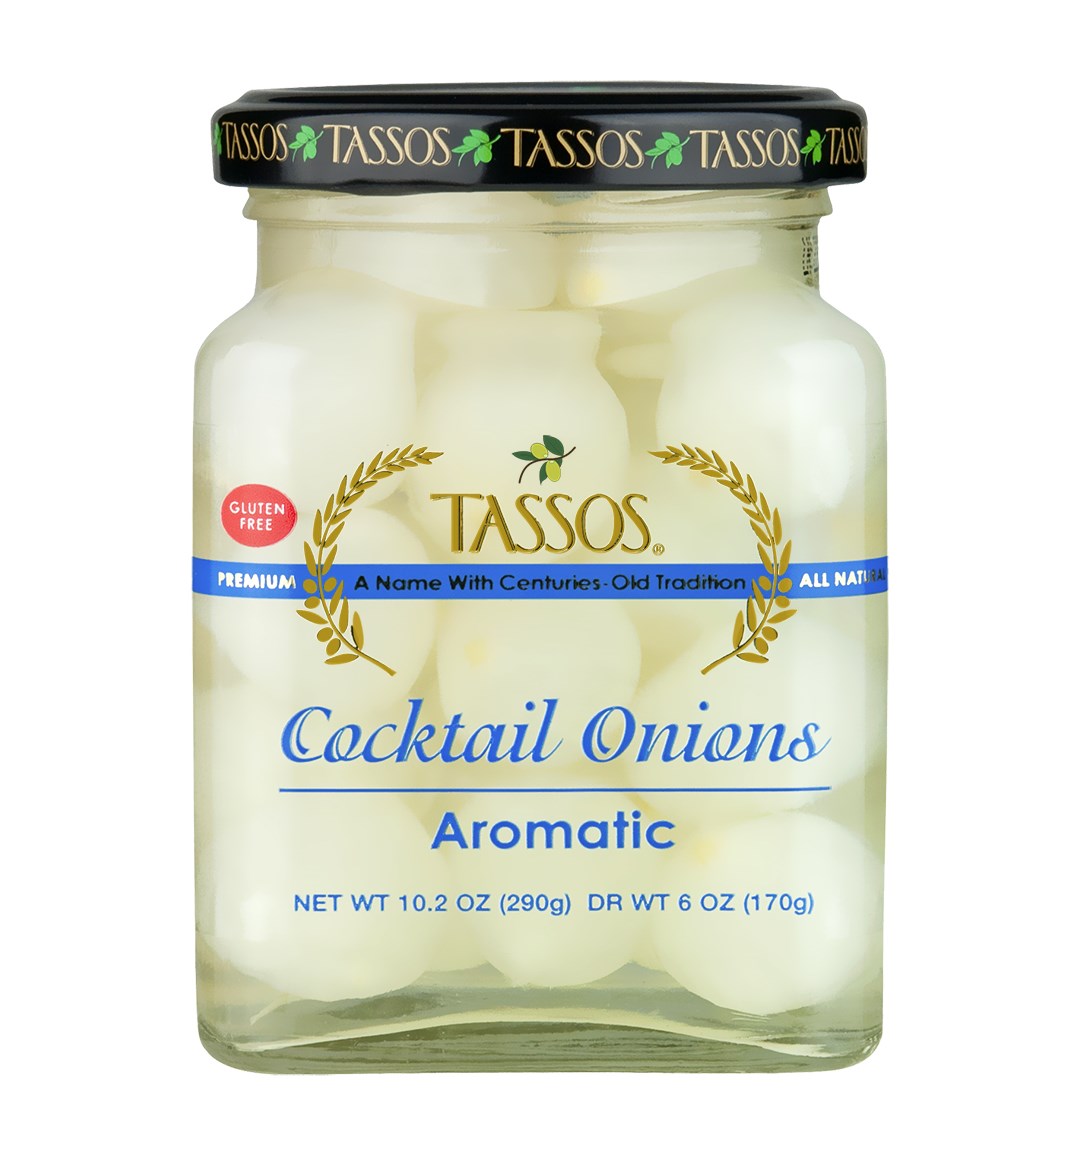 Tassos_Cocktail_Onions_-_Aromatic